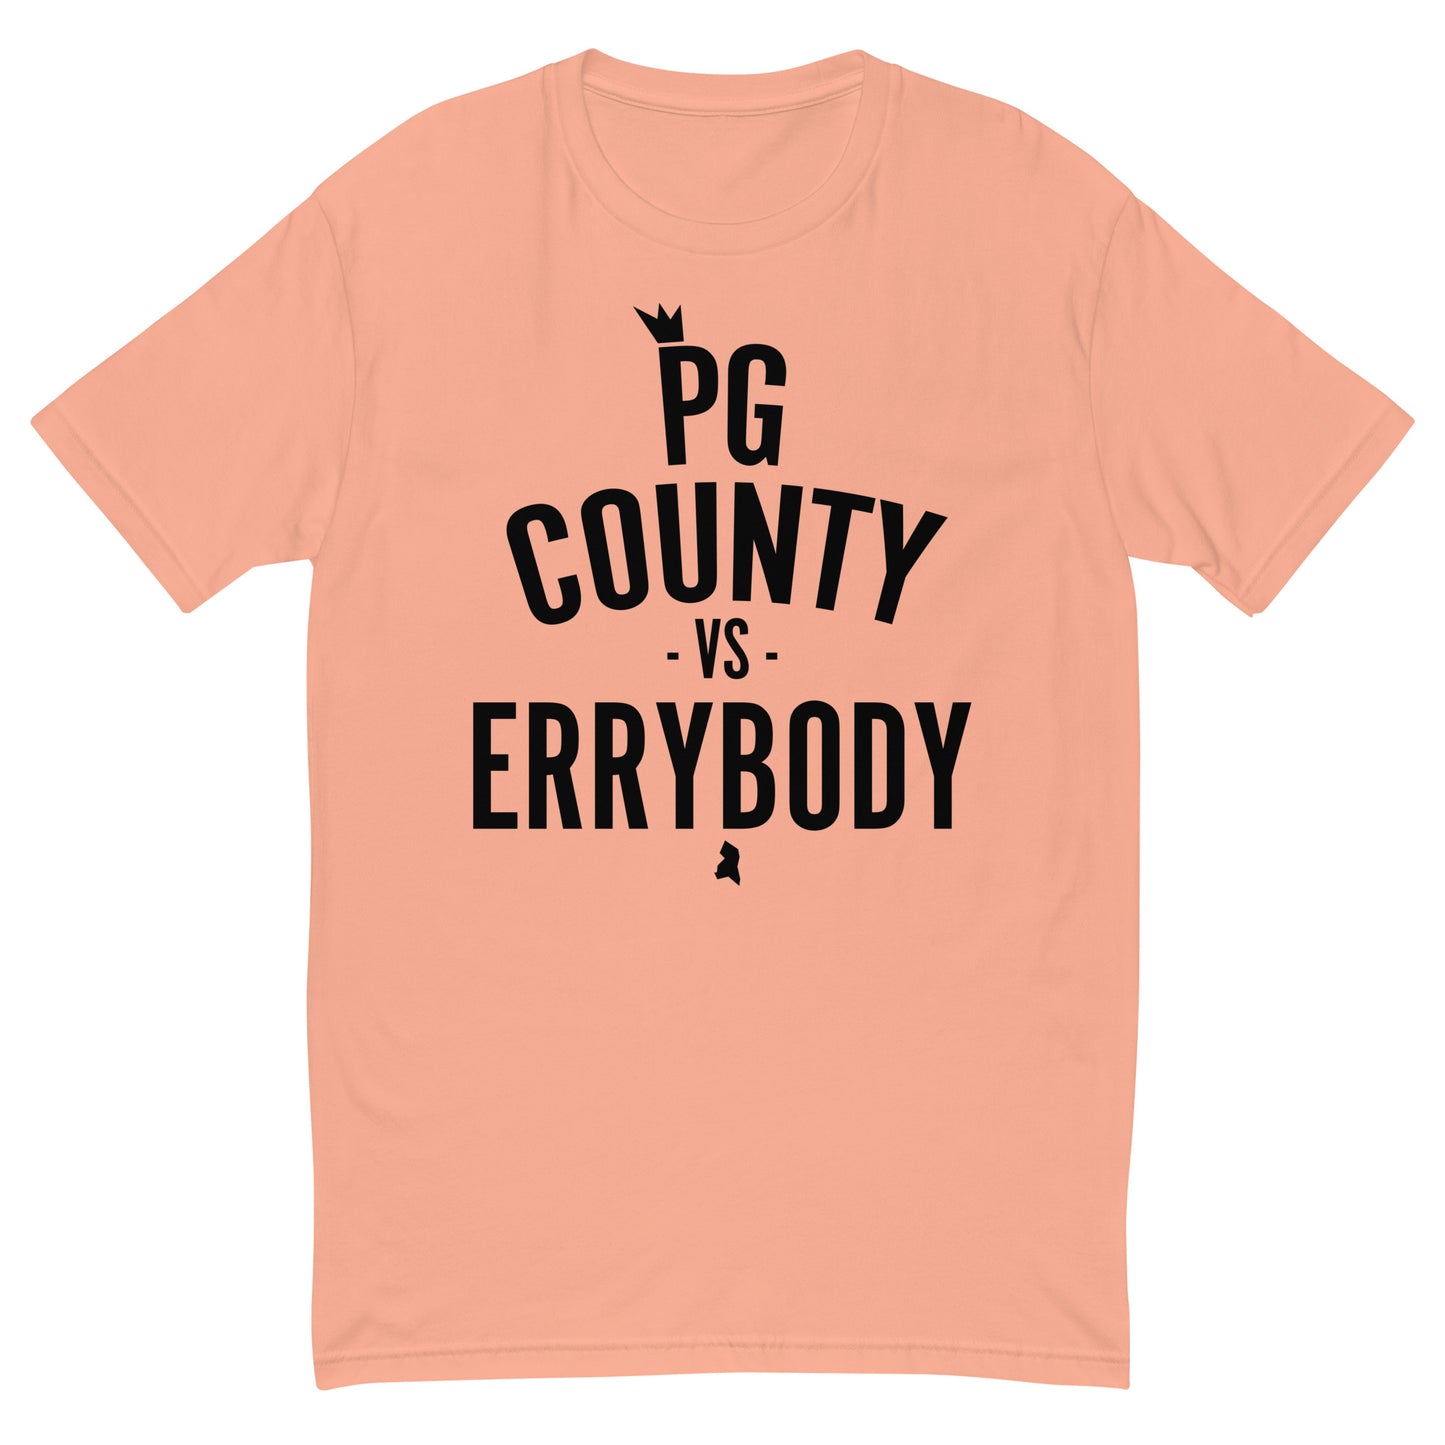 PG County vs ERRYBODY Unisex Tee